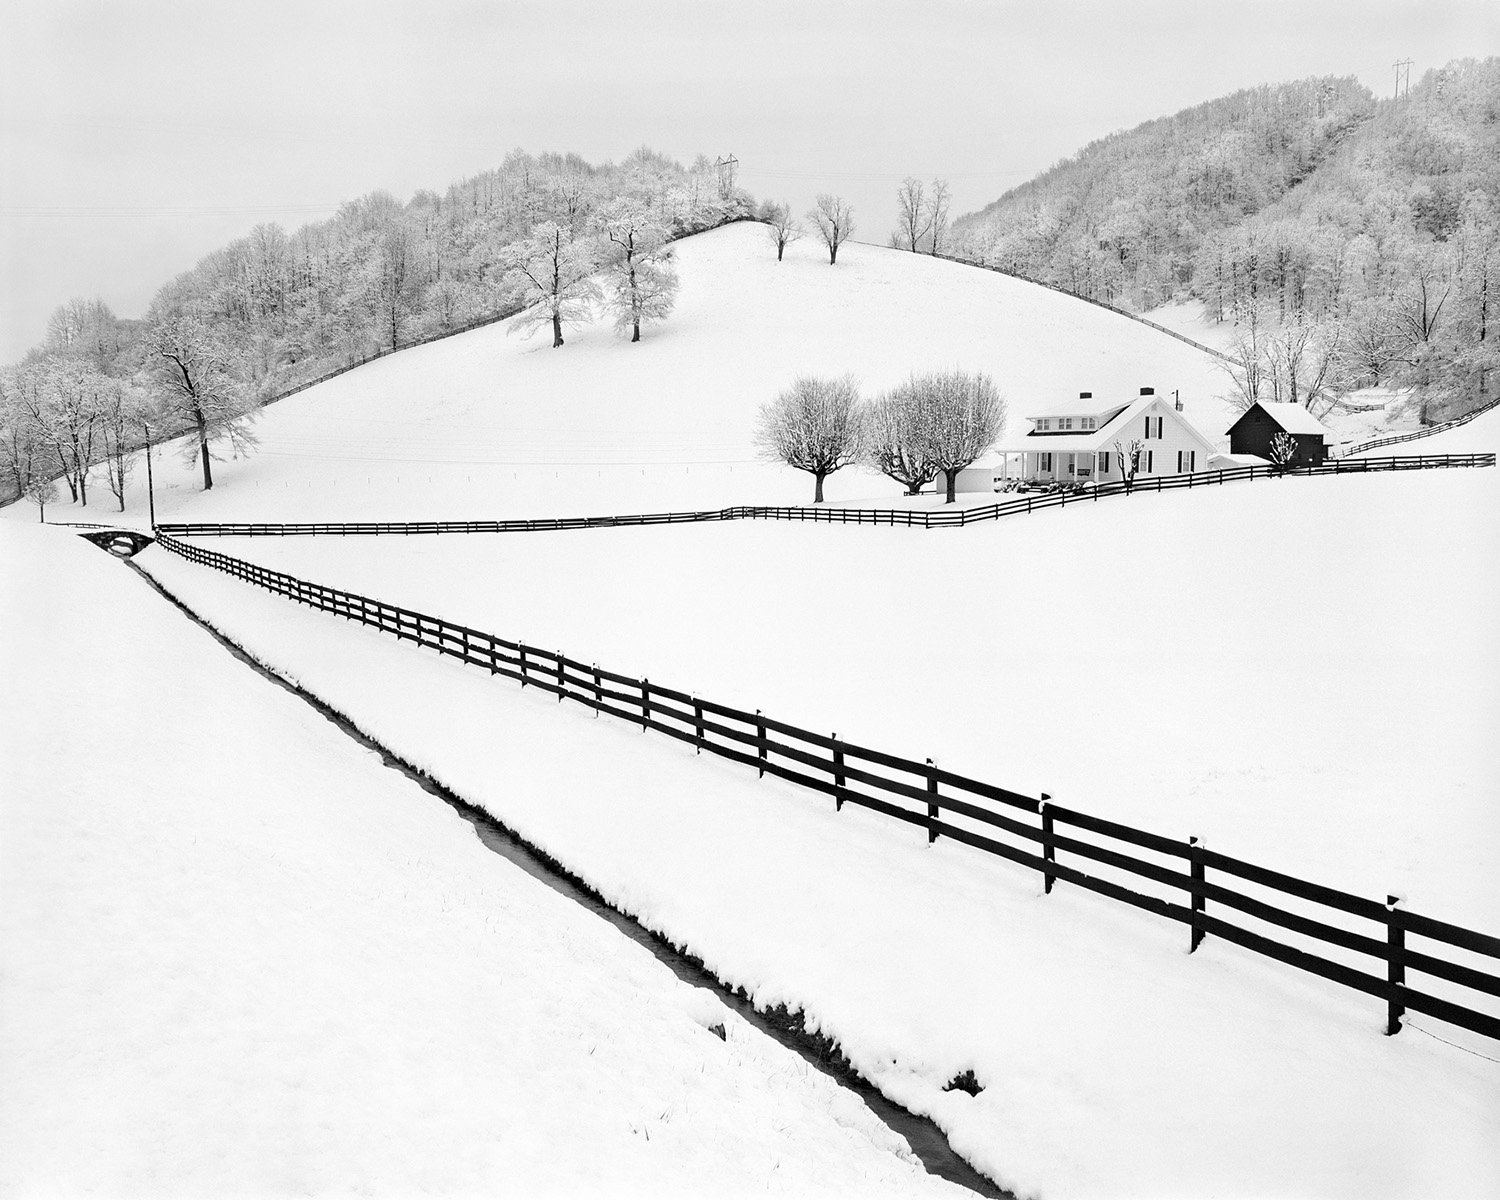 Snow fences Appalachian farm Tim Barnwell Photographer On Earth's Furrowed Brow